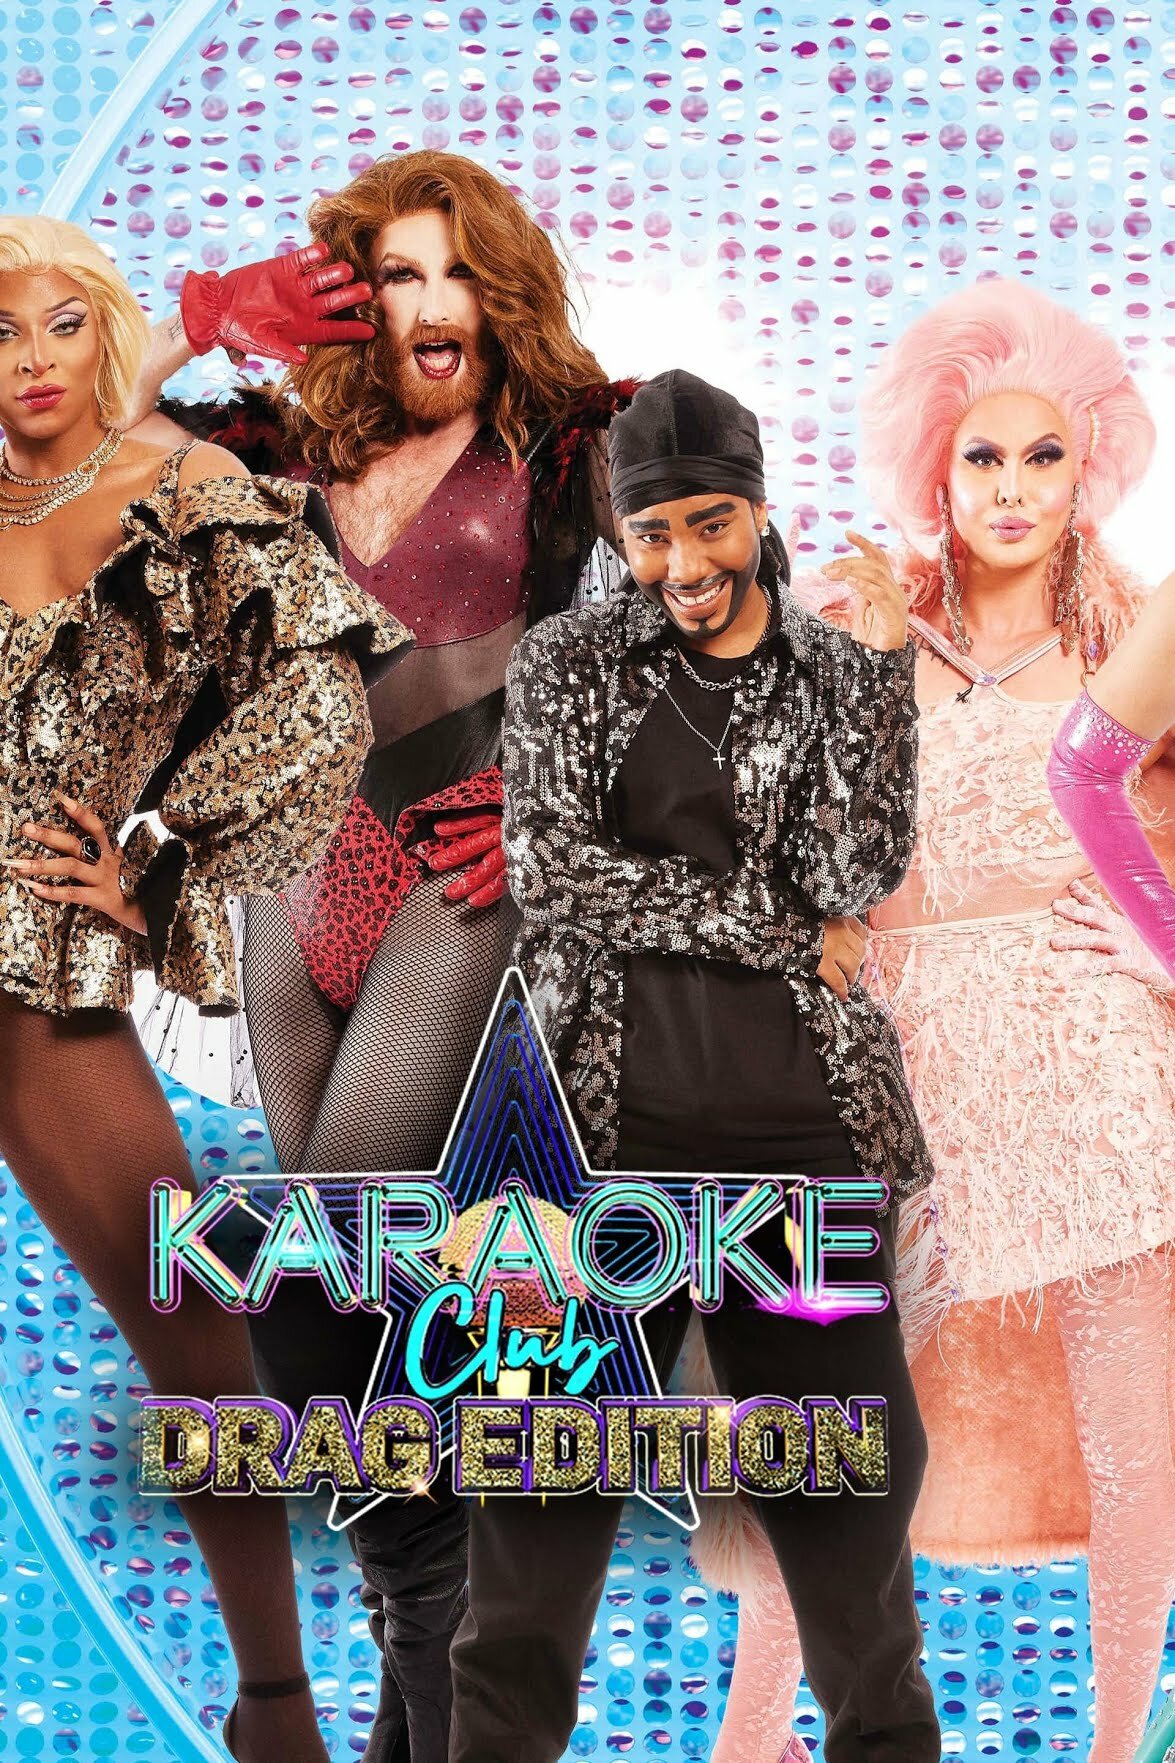 Karaoke Club: Drag Edition ne zaman